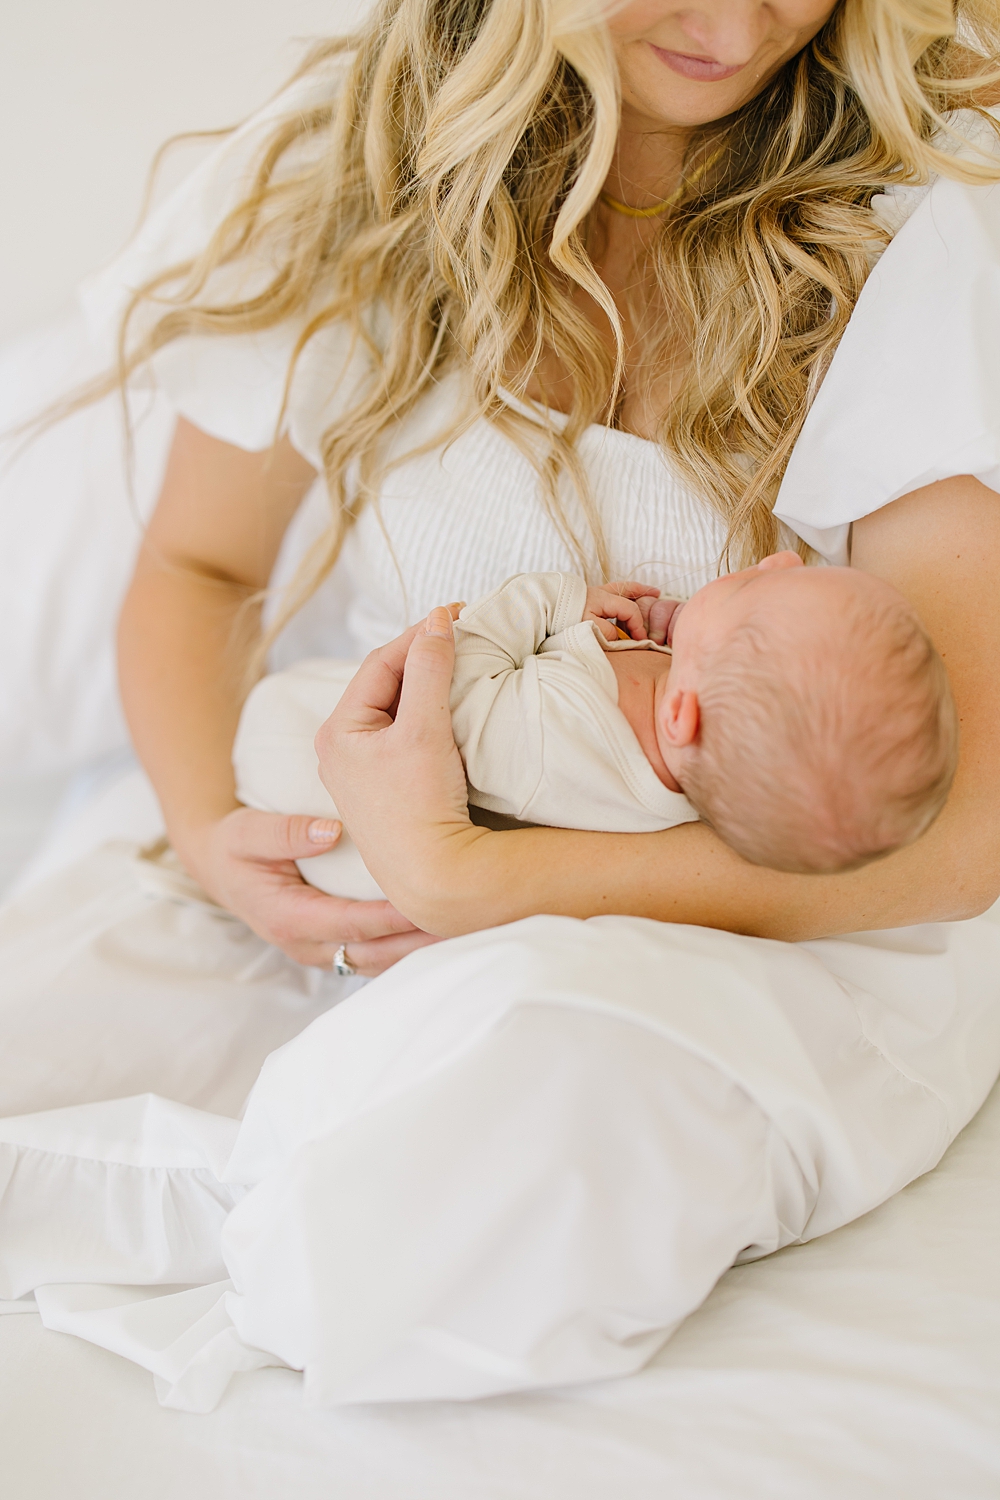 Herriman Newborn Photographer | Baby Boy